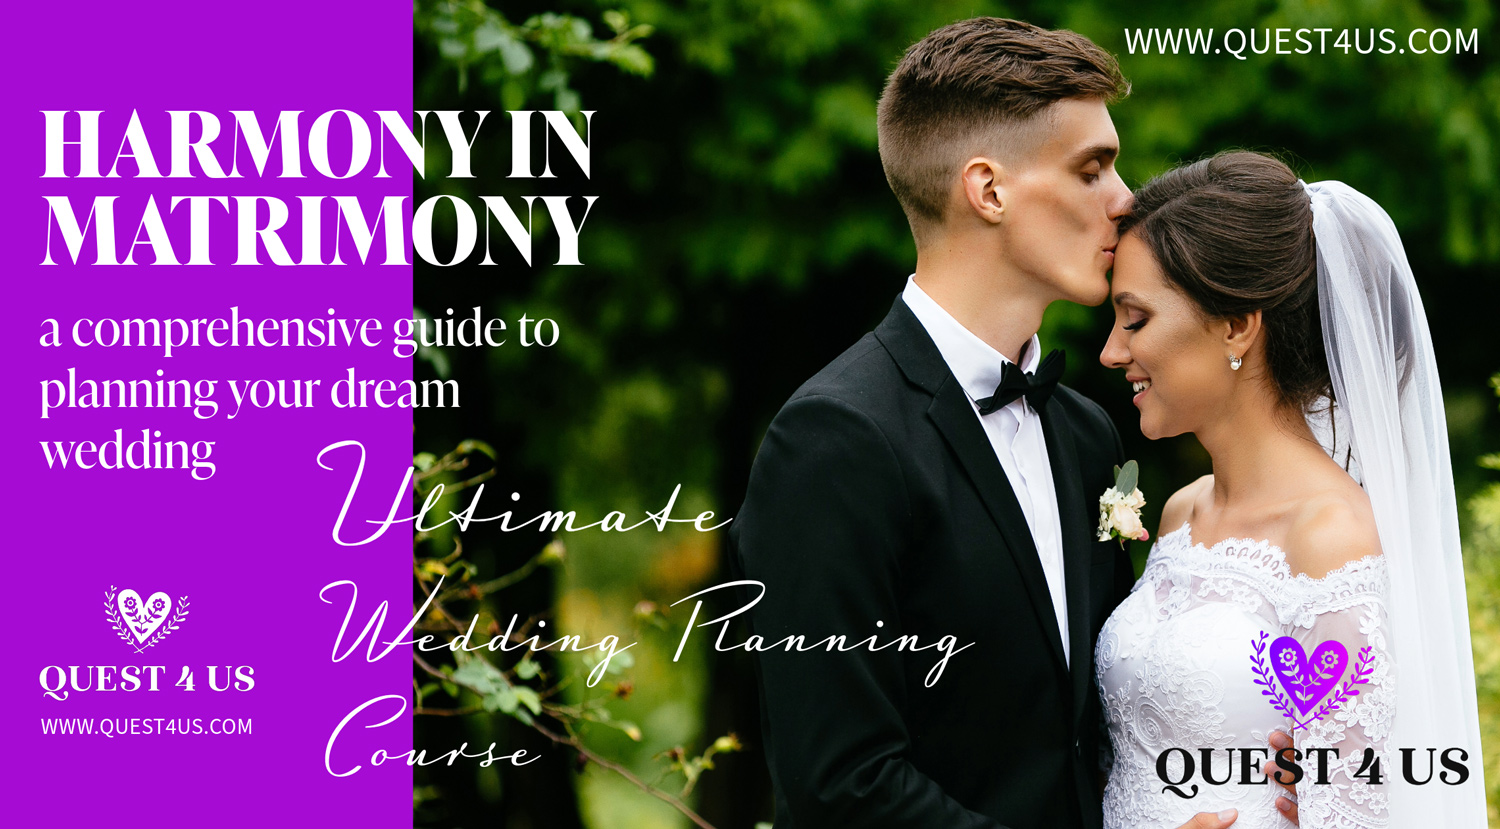 Unlock Your Dream Wedding: Discover Quest4Us.com's Free Wedding Planning Program